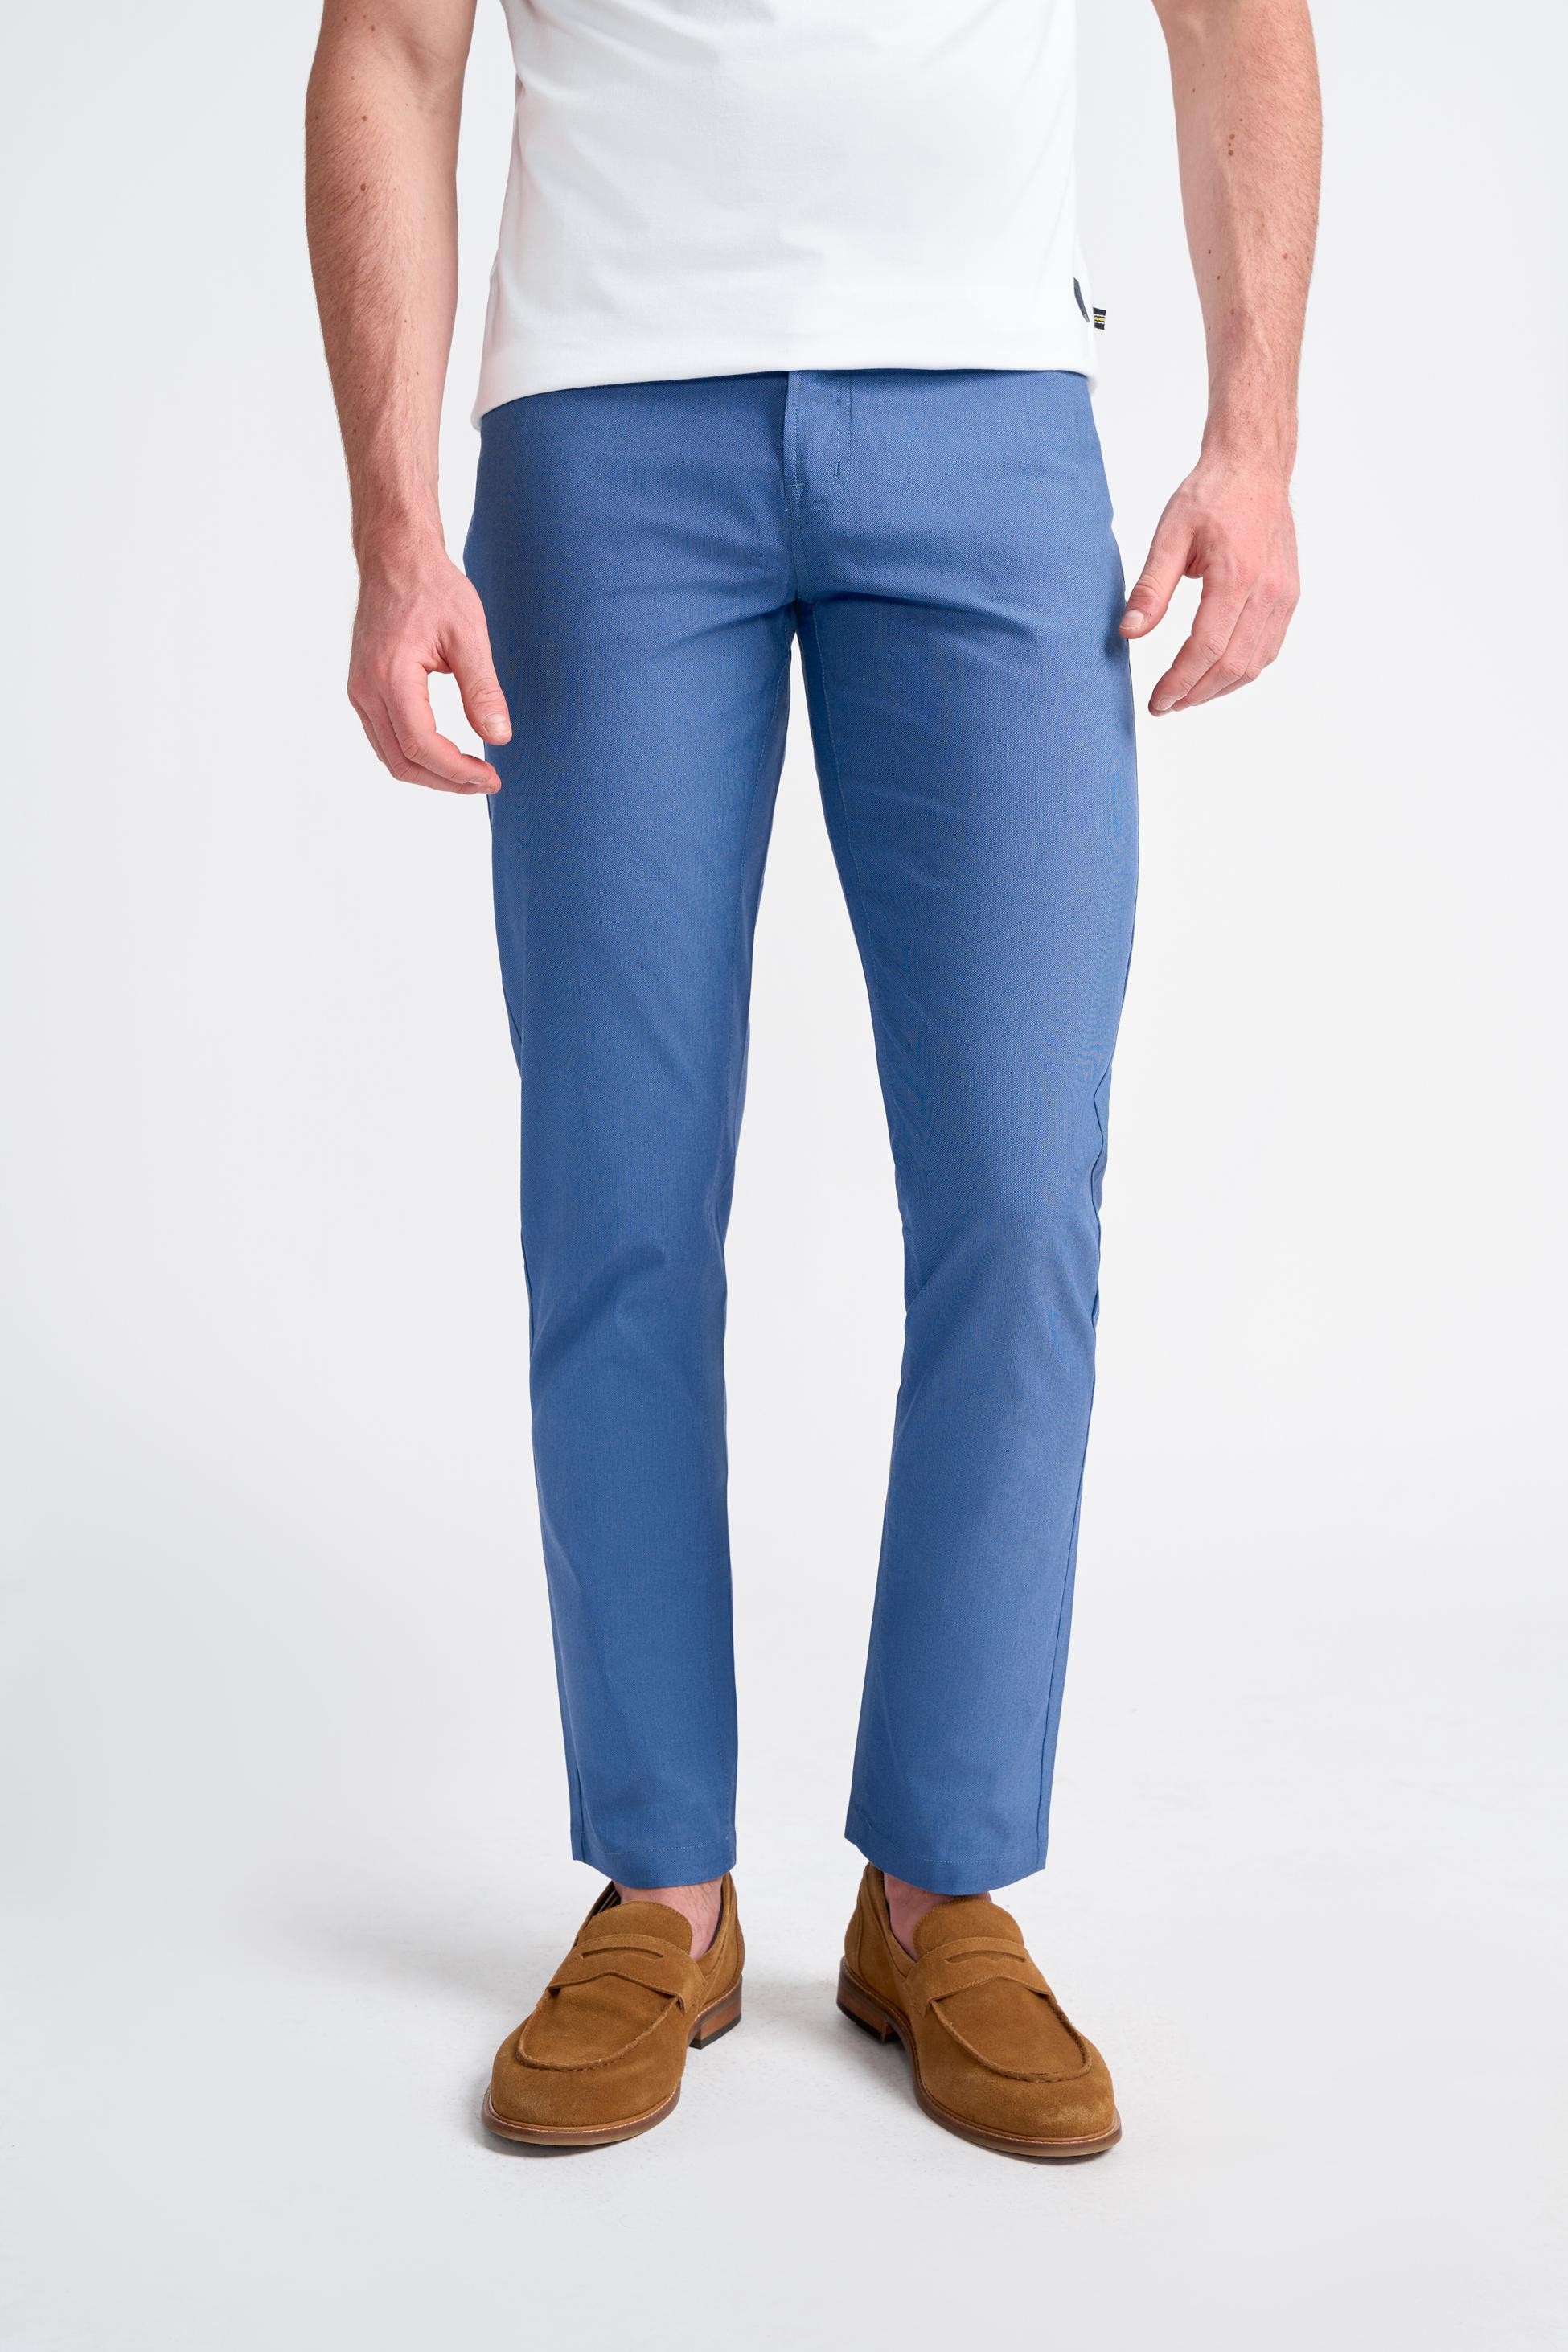 Men’s Cotton Blend Jean Cut Chino Pants  – DALTON - Cobalt  Blue